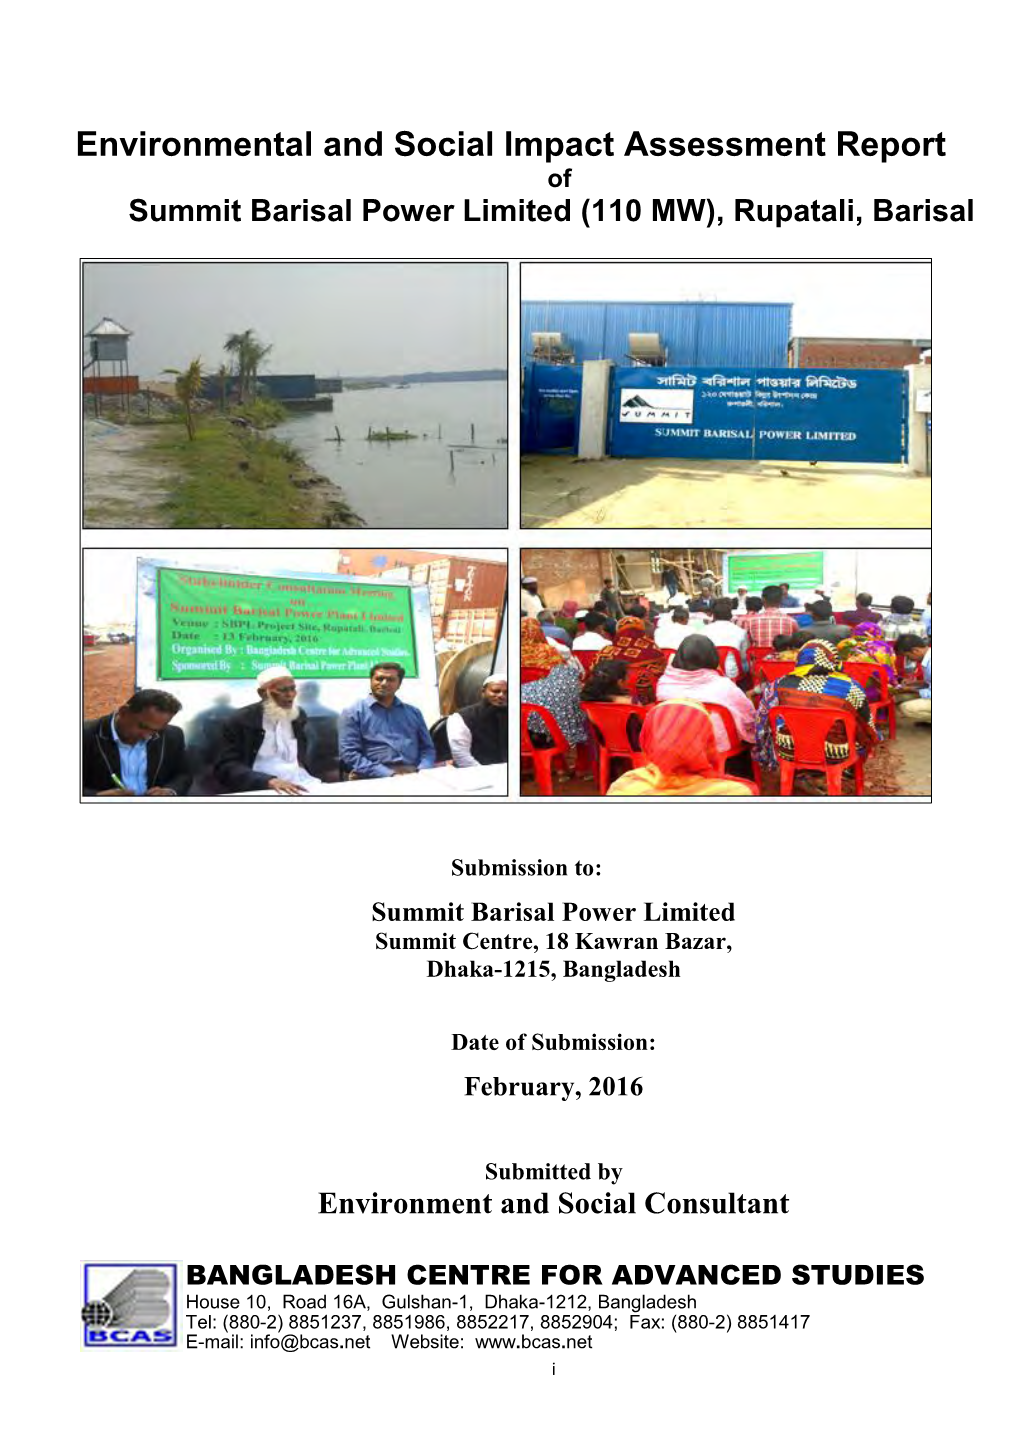 Environmental and Social Impact Assessment Report of Summit Barisal Power Limited (110 MW), Rupatali, Barisal